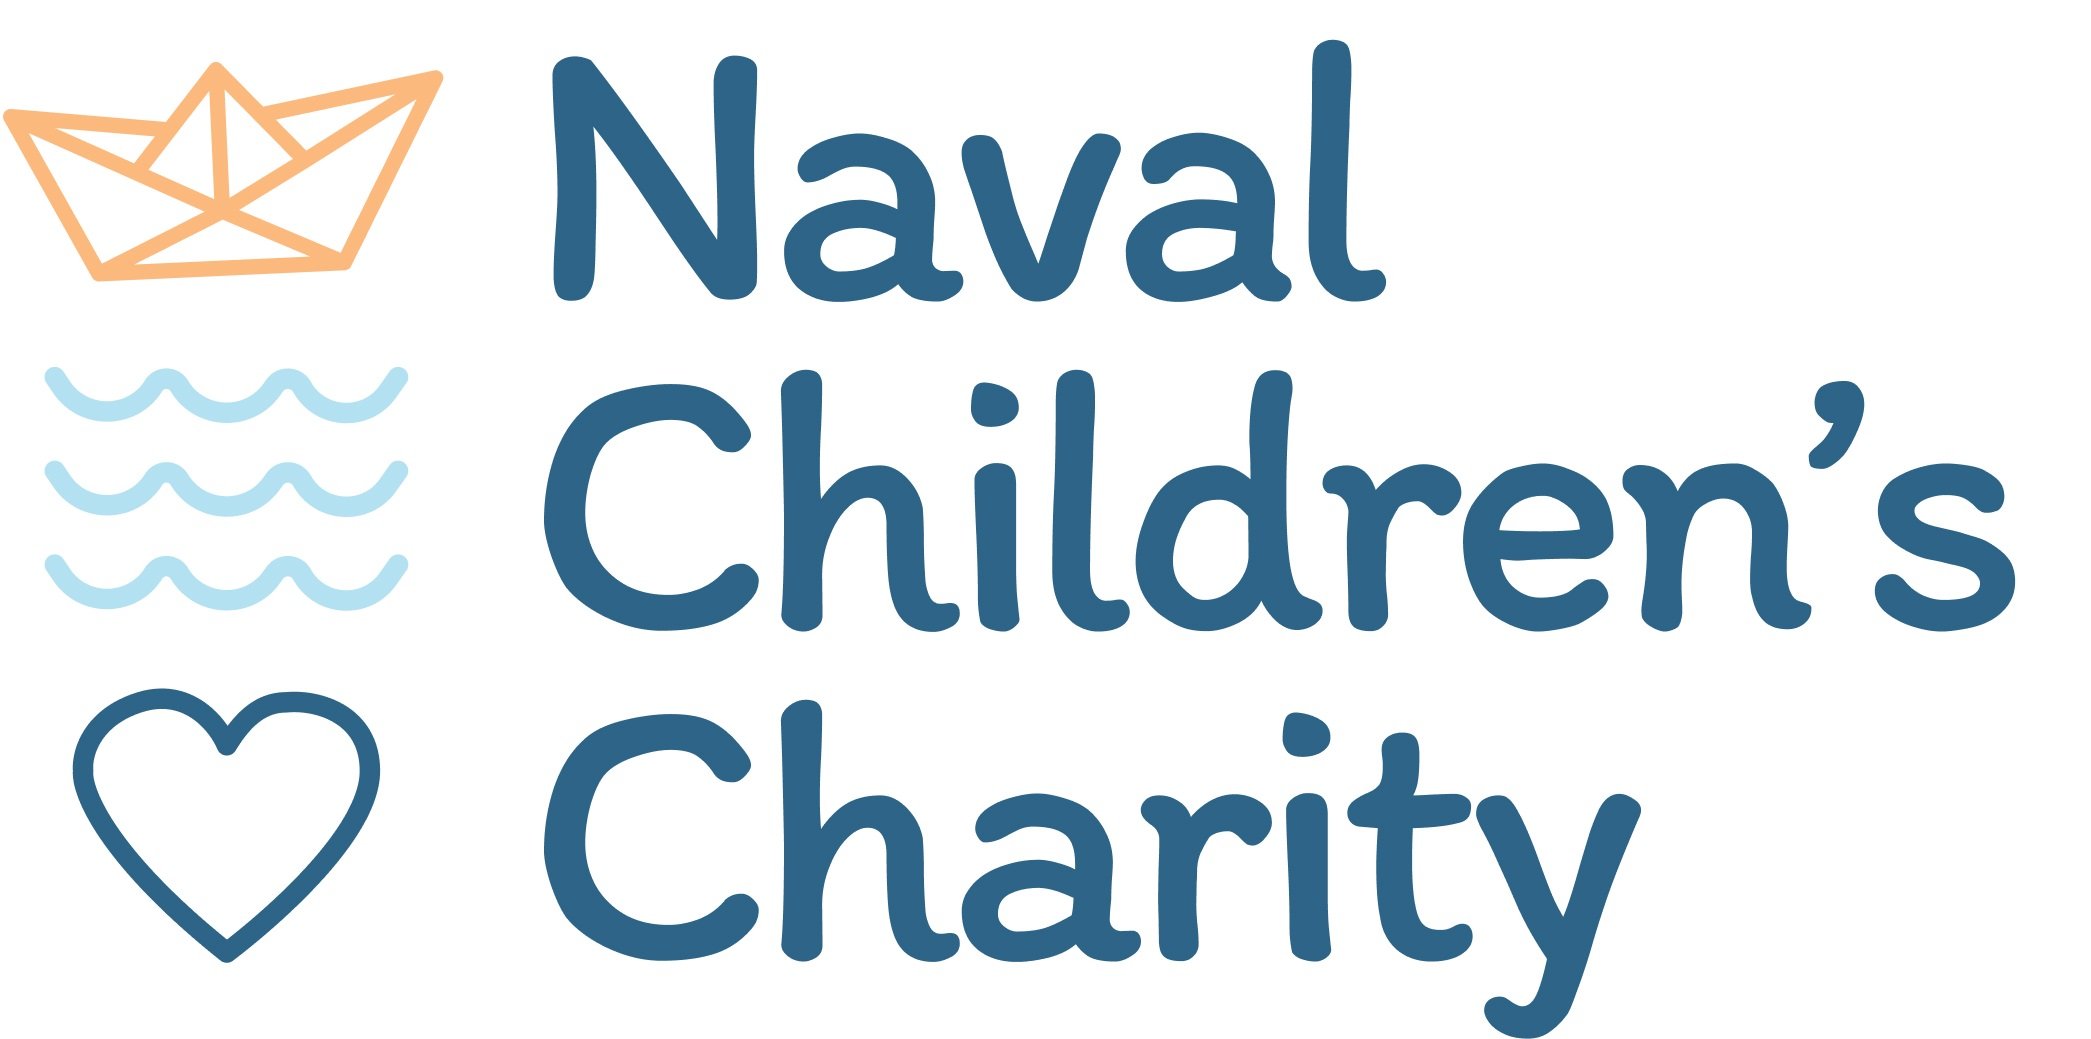 Naval Children's Charity.jpg